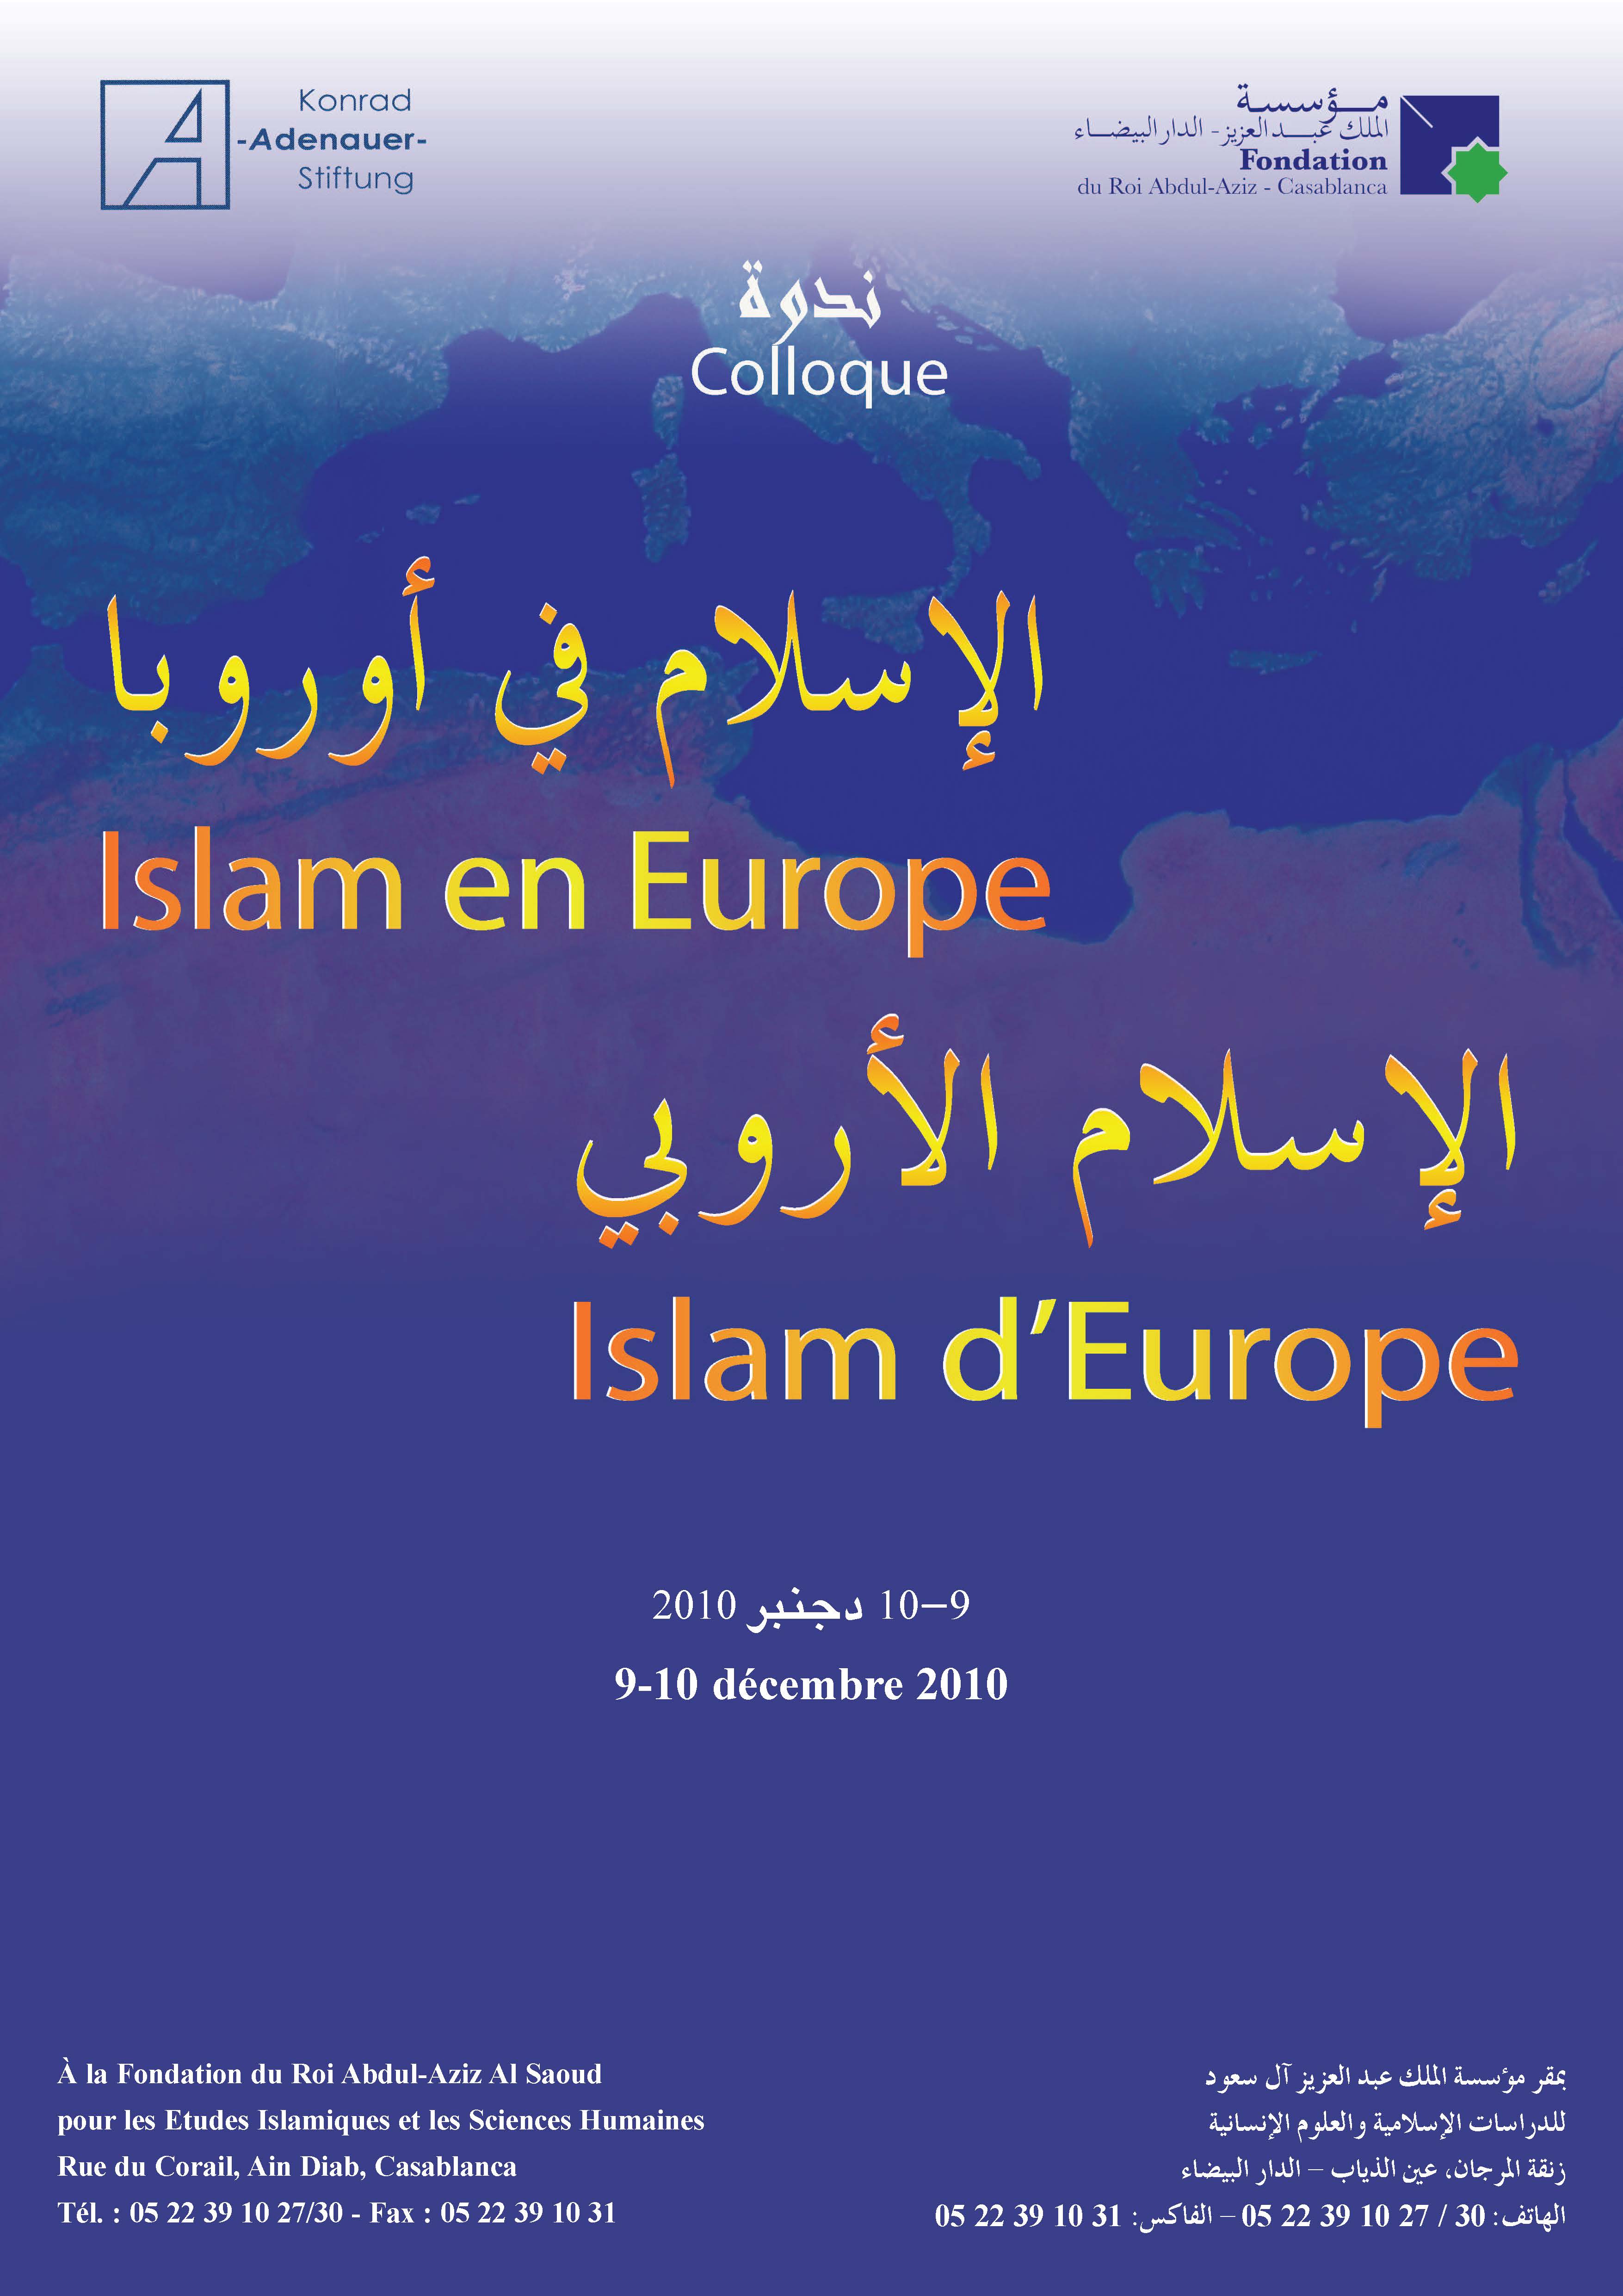 Islam en Europe, Islam d’Europe (Casablanca, 9-10 décembre 2010)